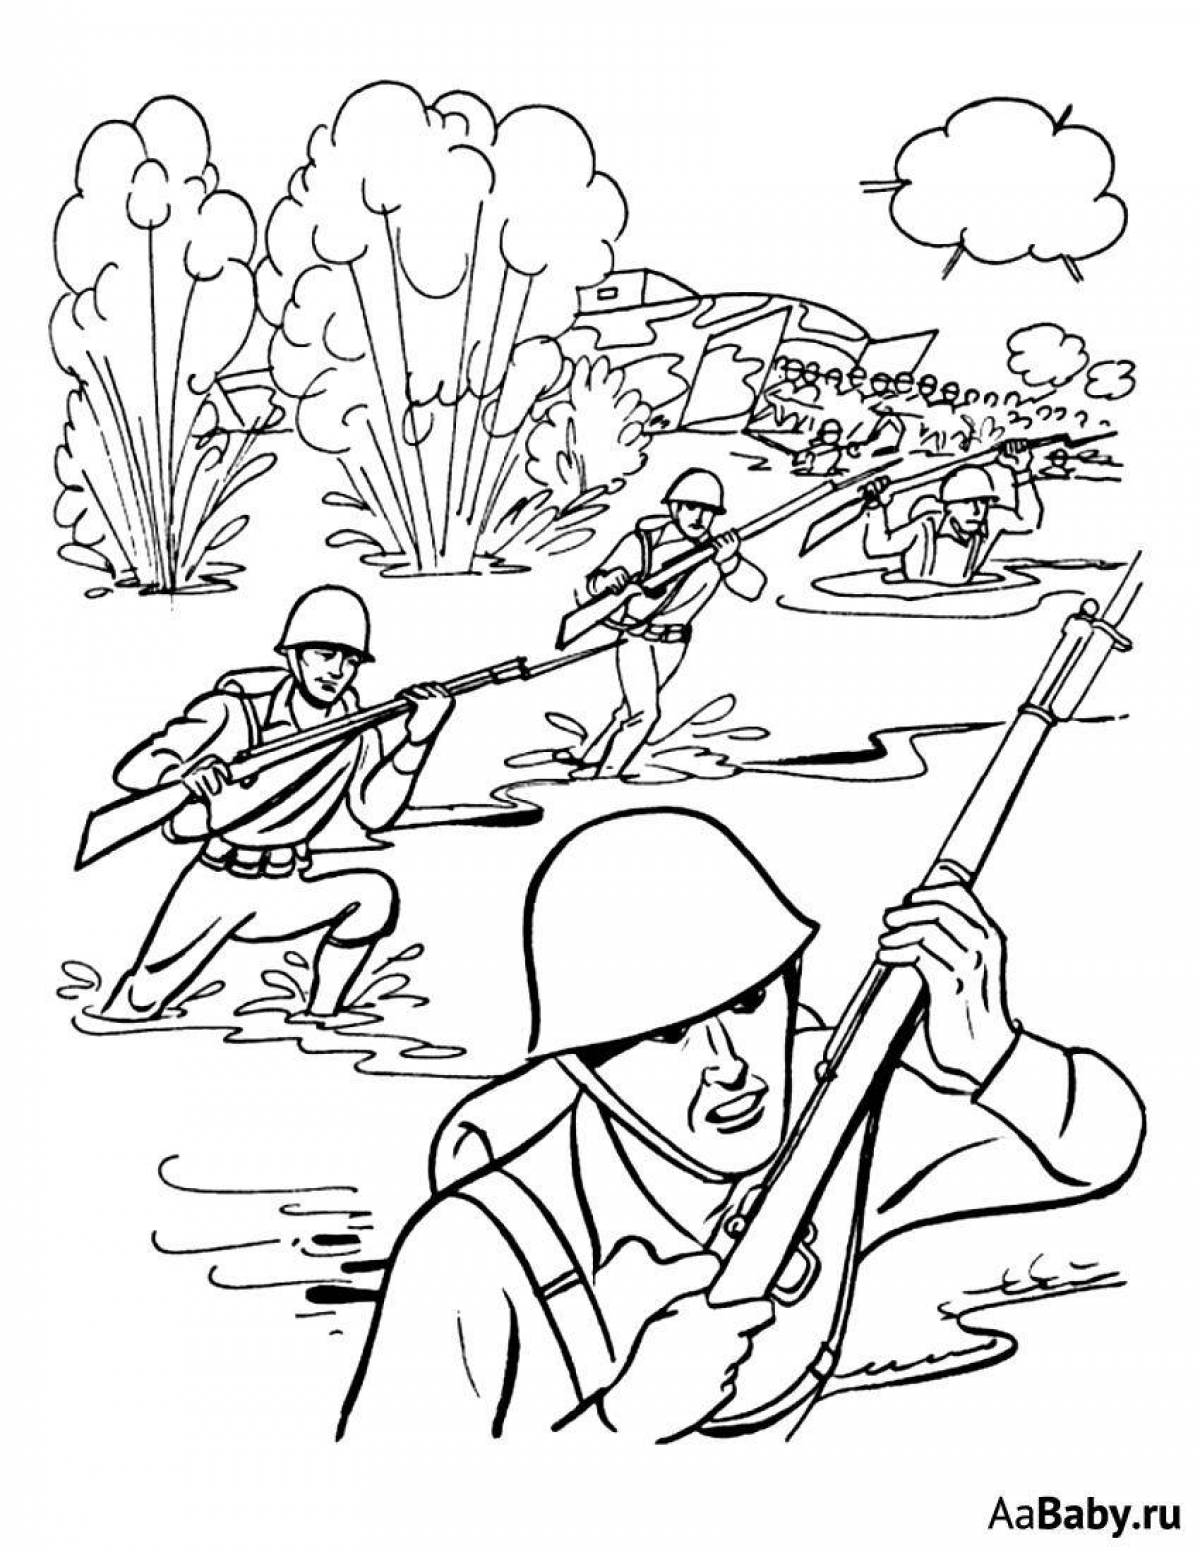 Merry Stalingrad battle coloring book for kids